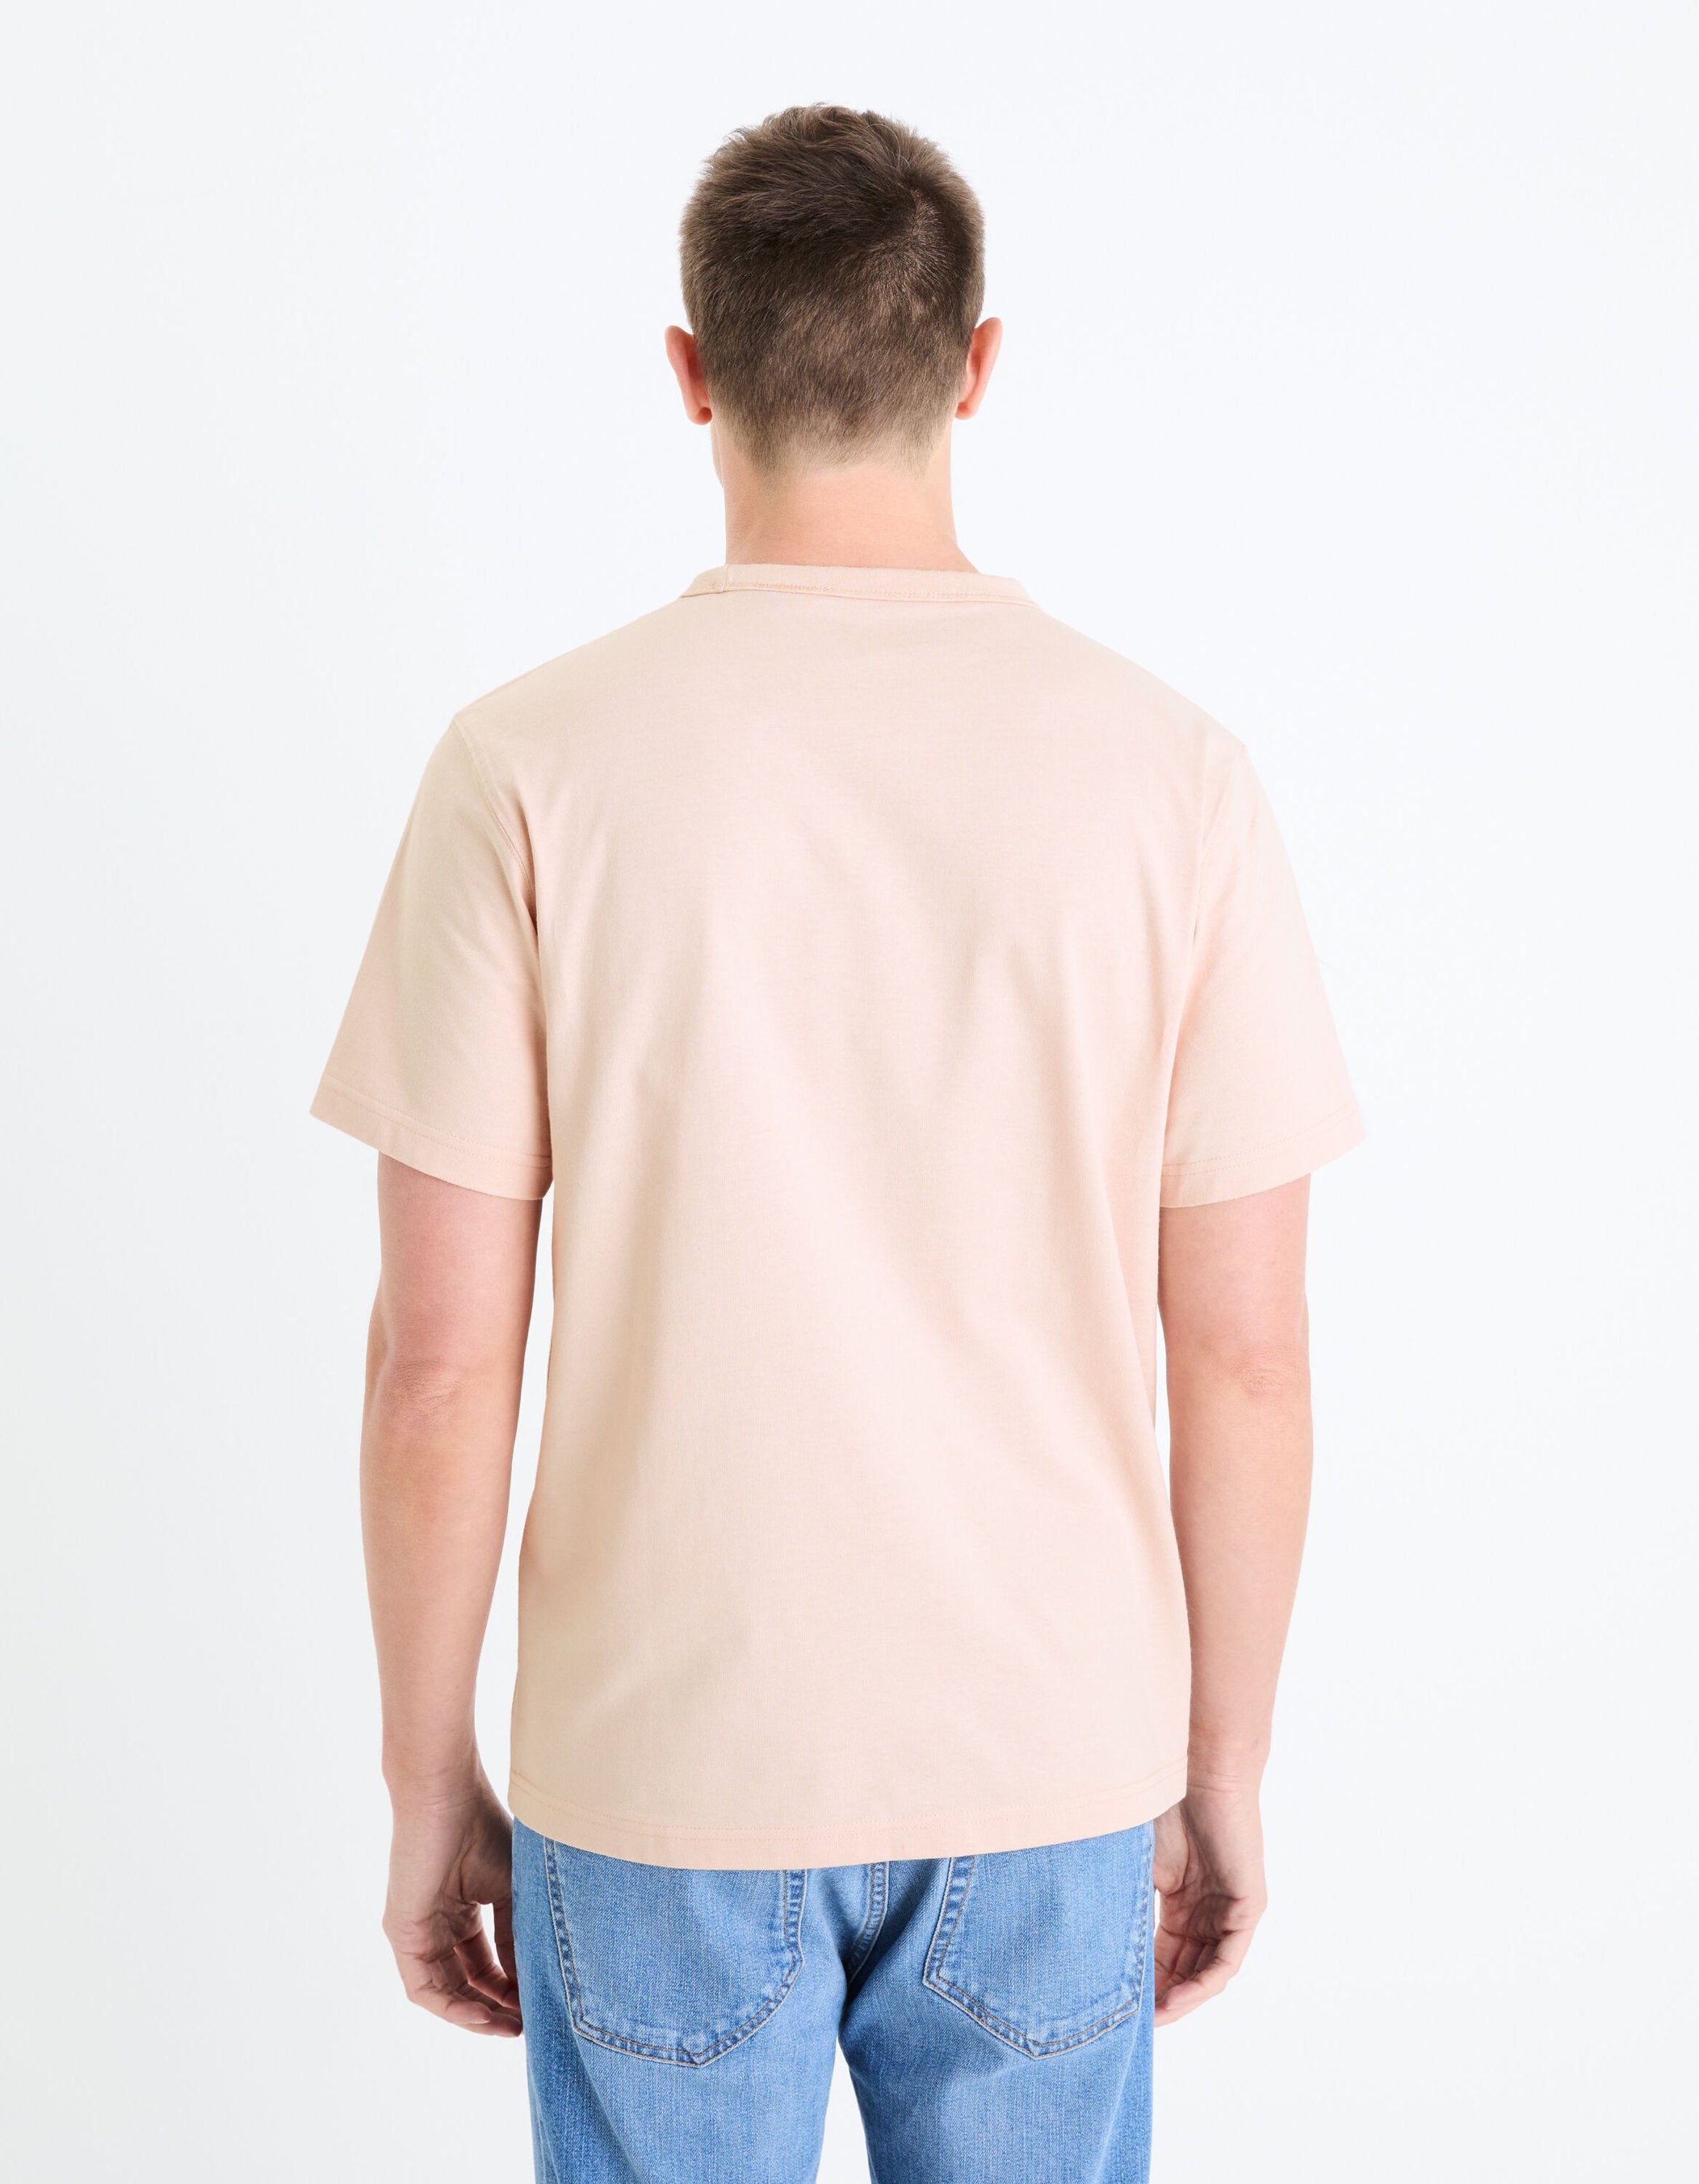 Round-Neck Printed Cotton T-Shirt_GEDOUBLOS_LIGHT PINK 01_04